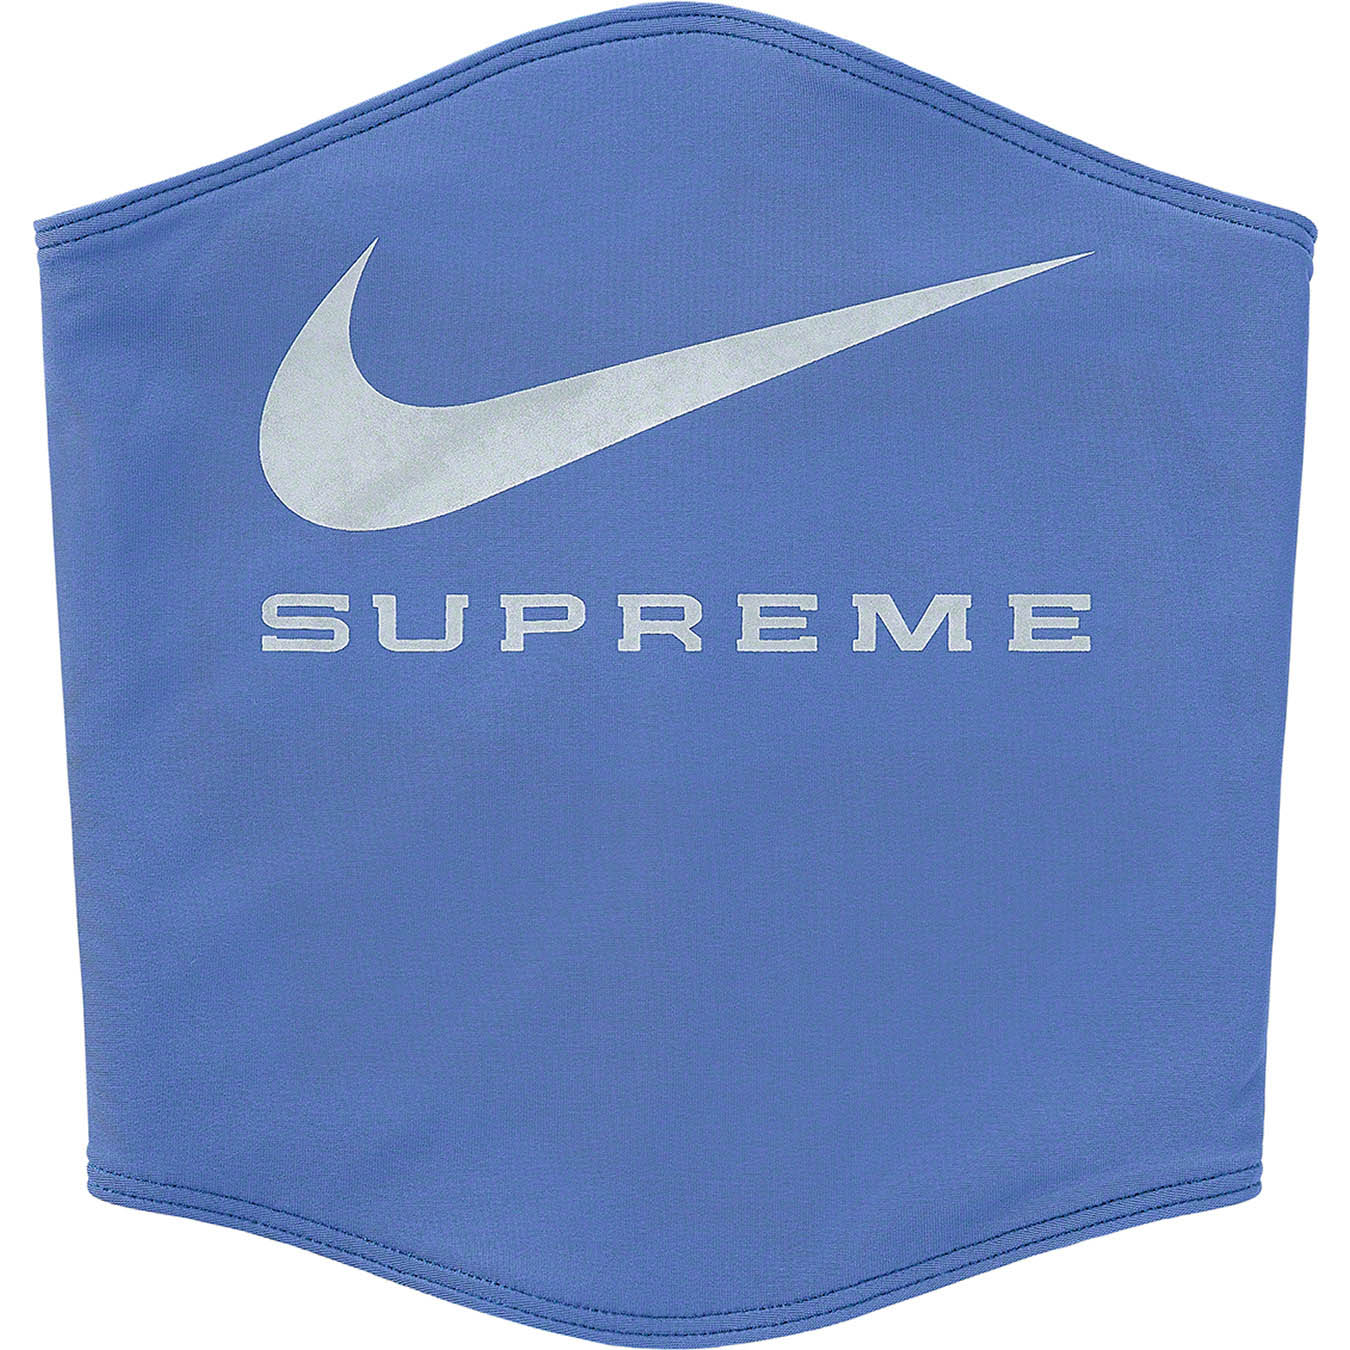 Supreme®/Nike® Neck Warmer